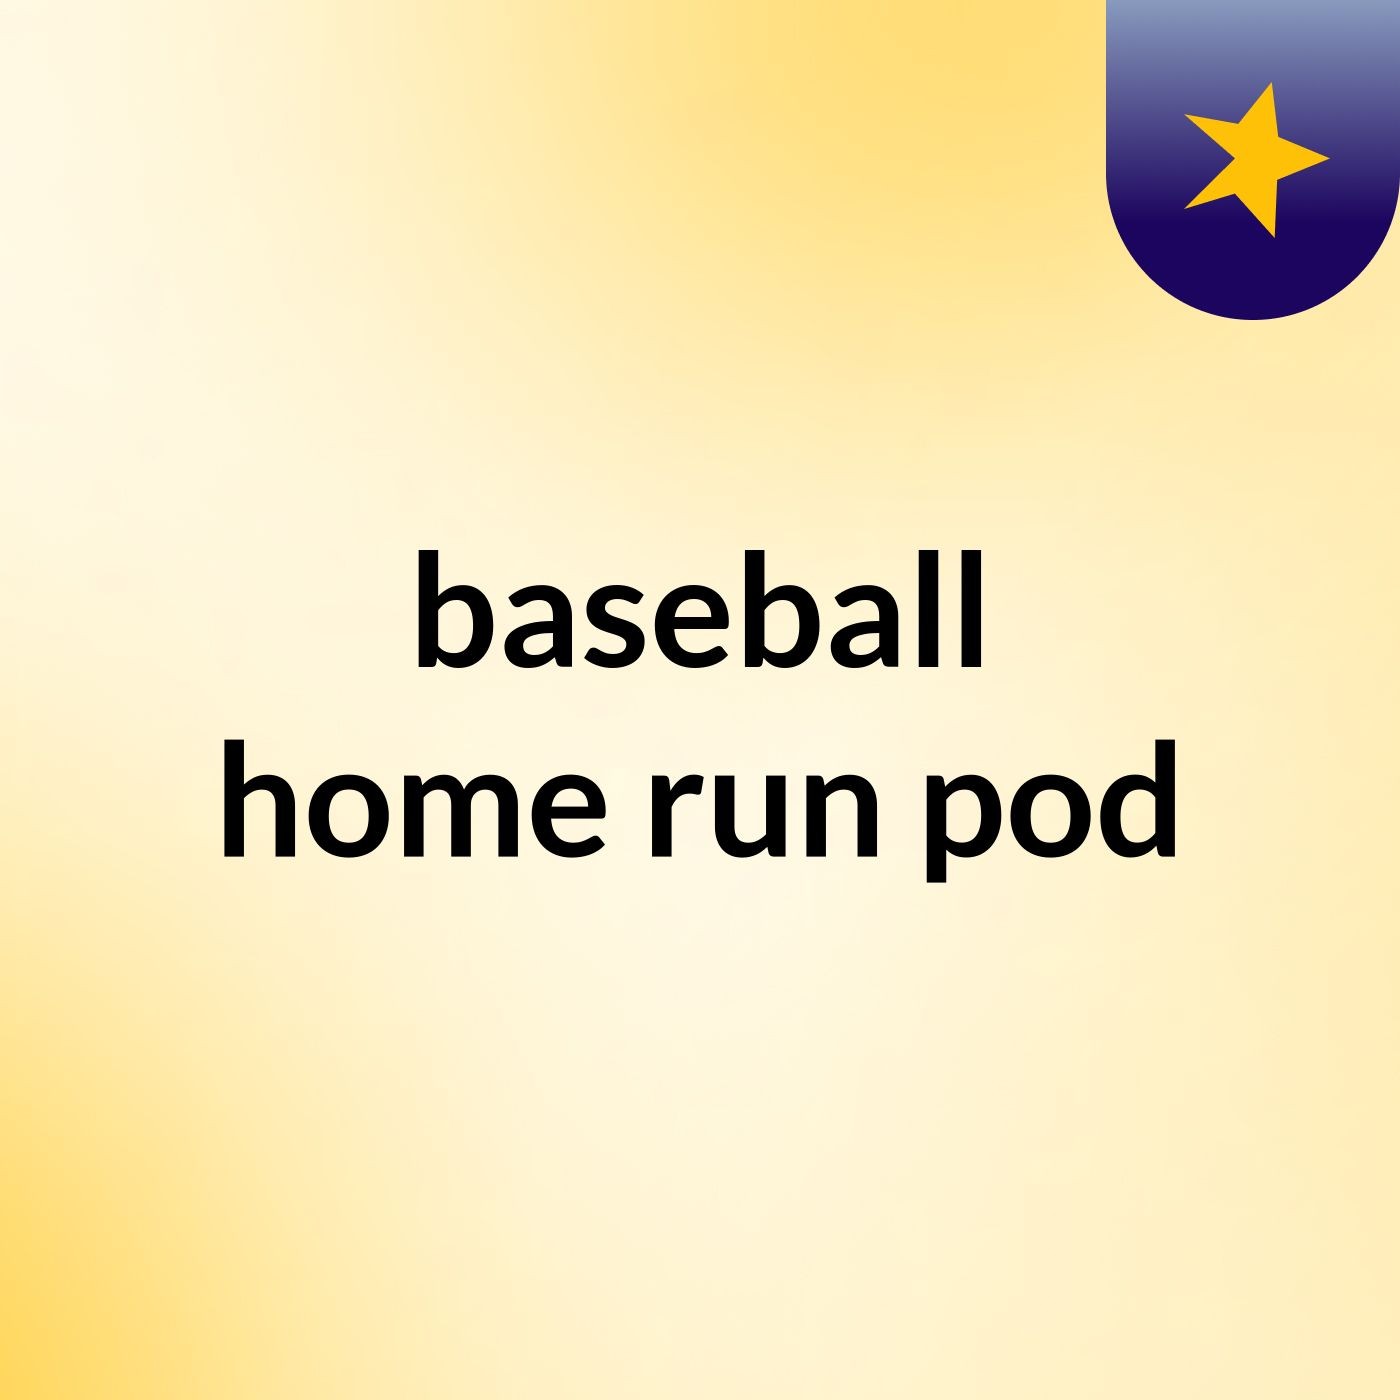 Episode 12 - baseball home run pod